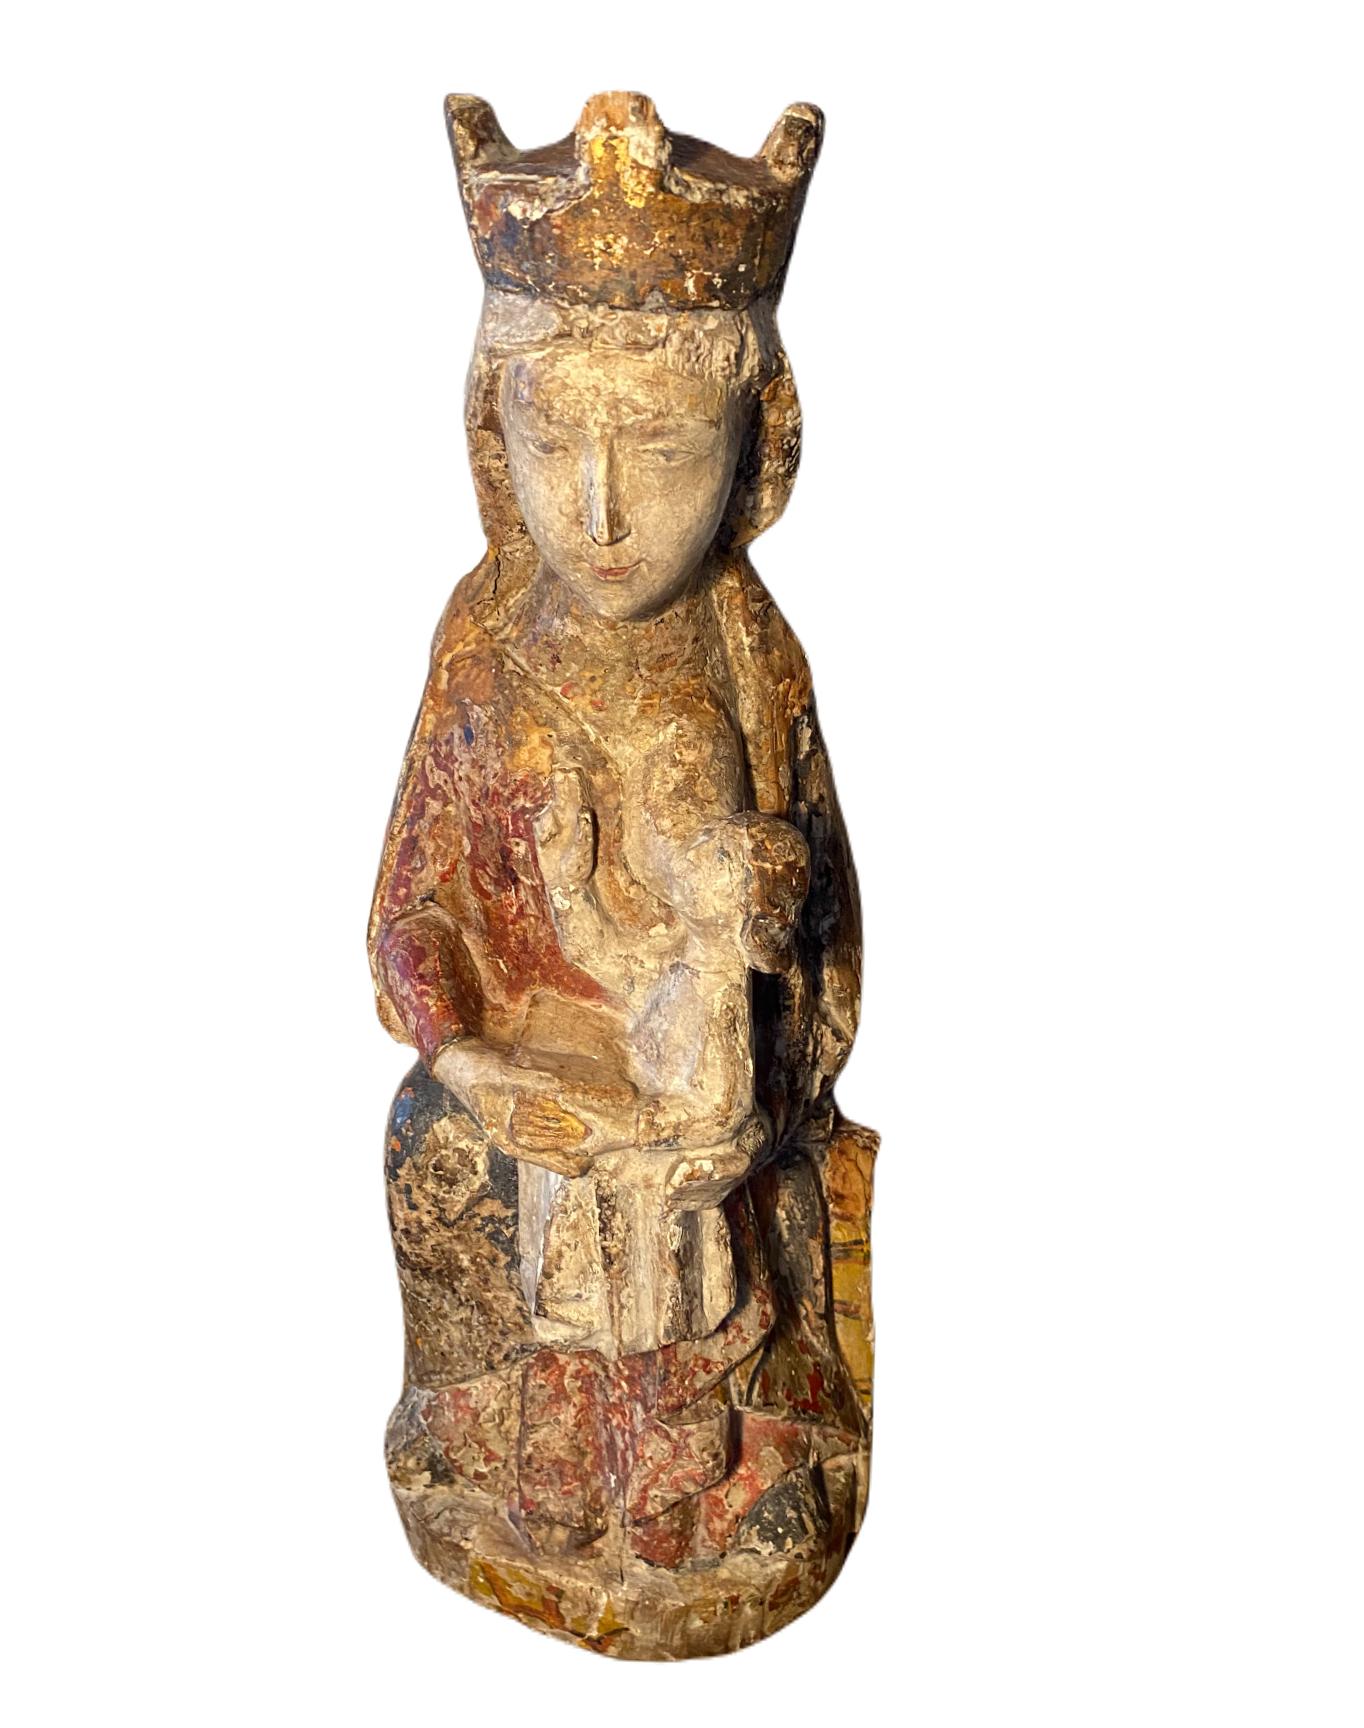 Unknown Figurative Sculpture - Enthroned Virgin